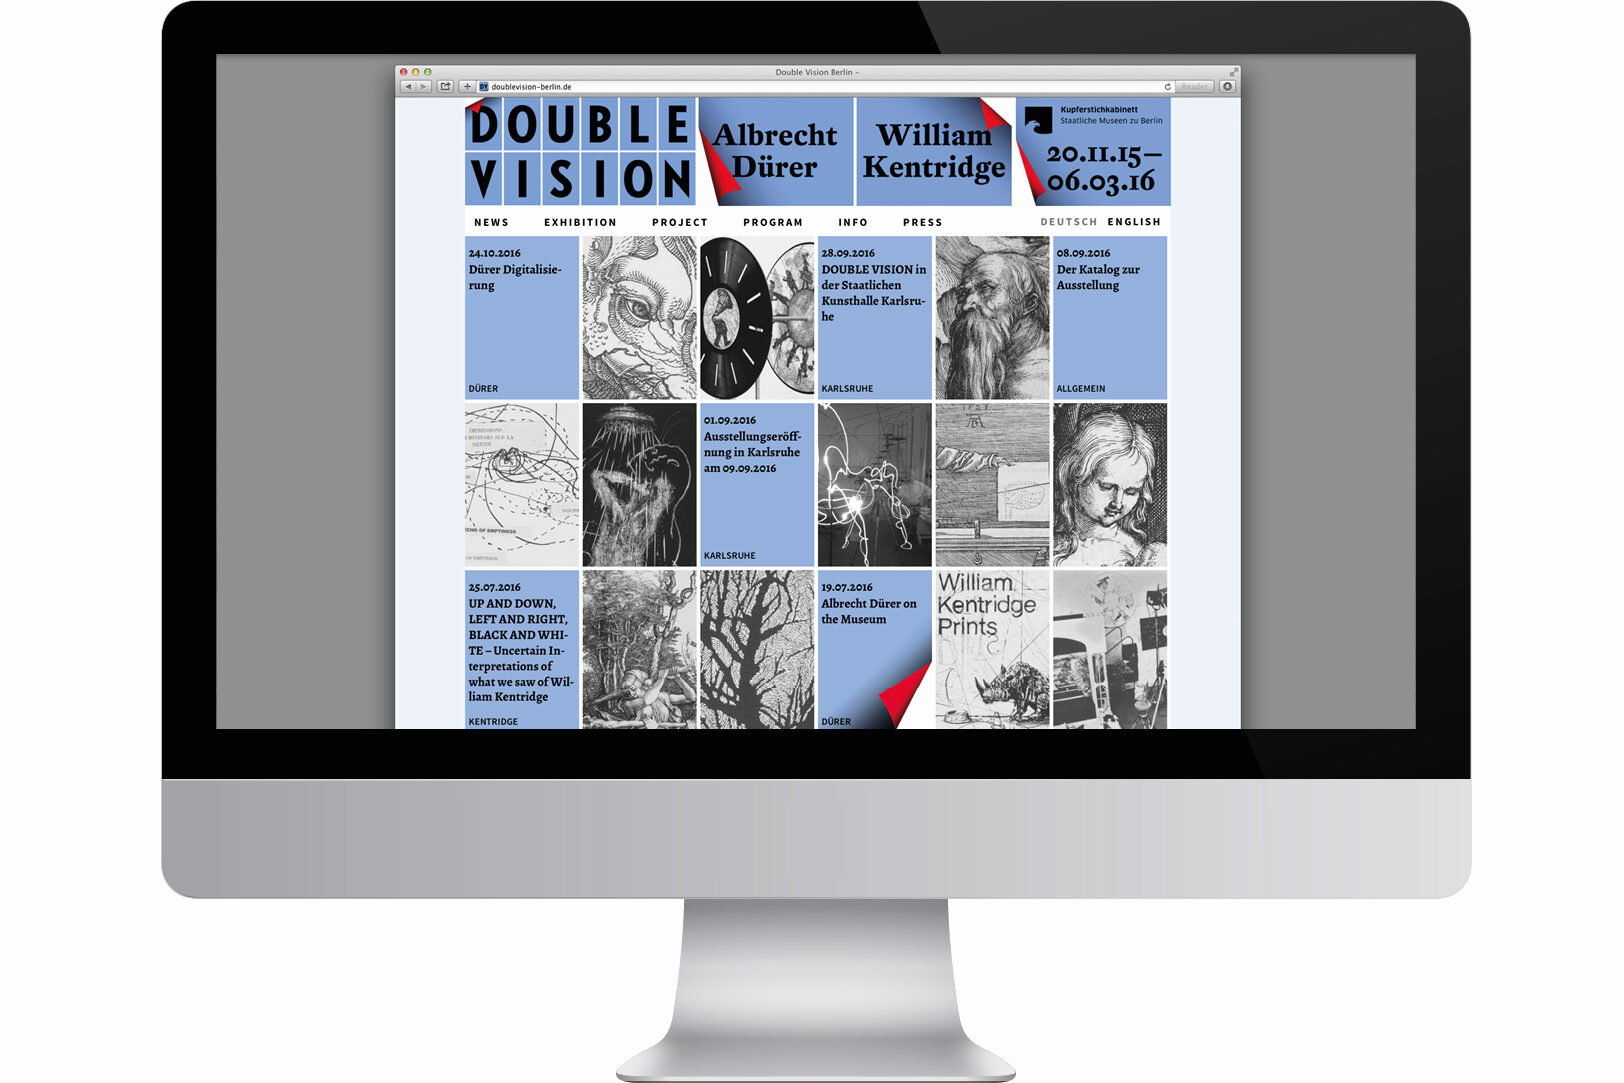 http://e-o-t.de/wordpress/wp-content/uploads/2015/11/Eot-Double-Vision-Web-1-1.jpg